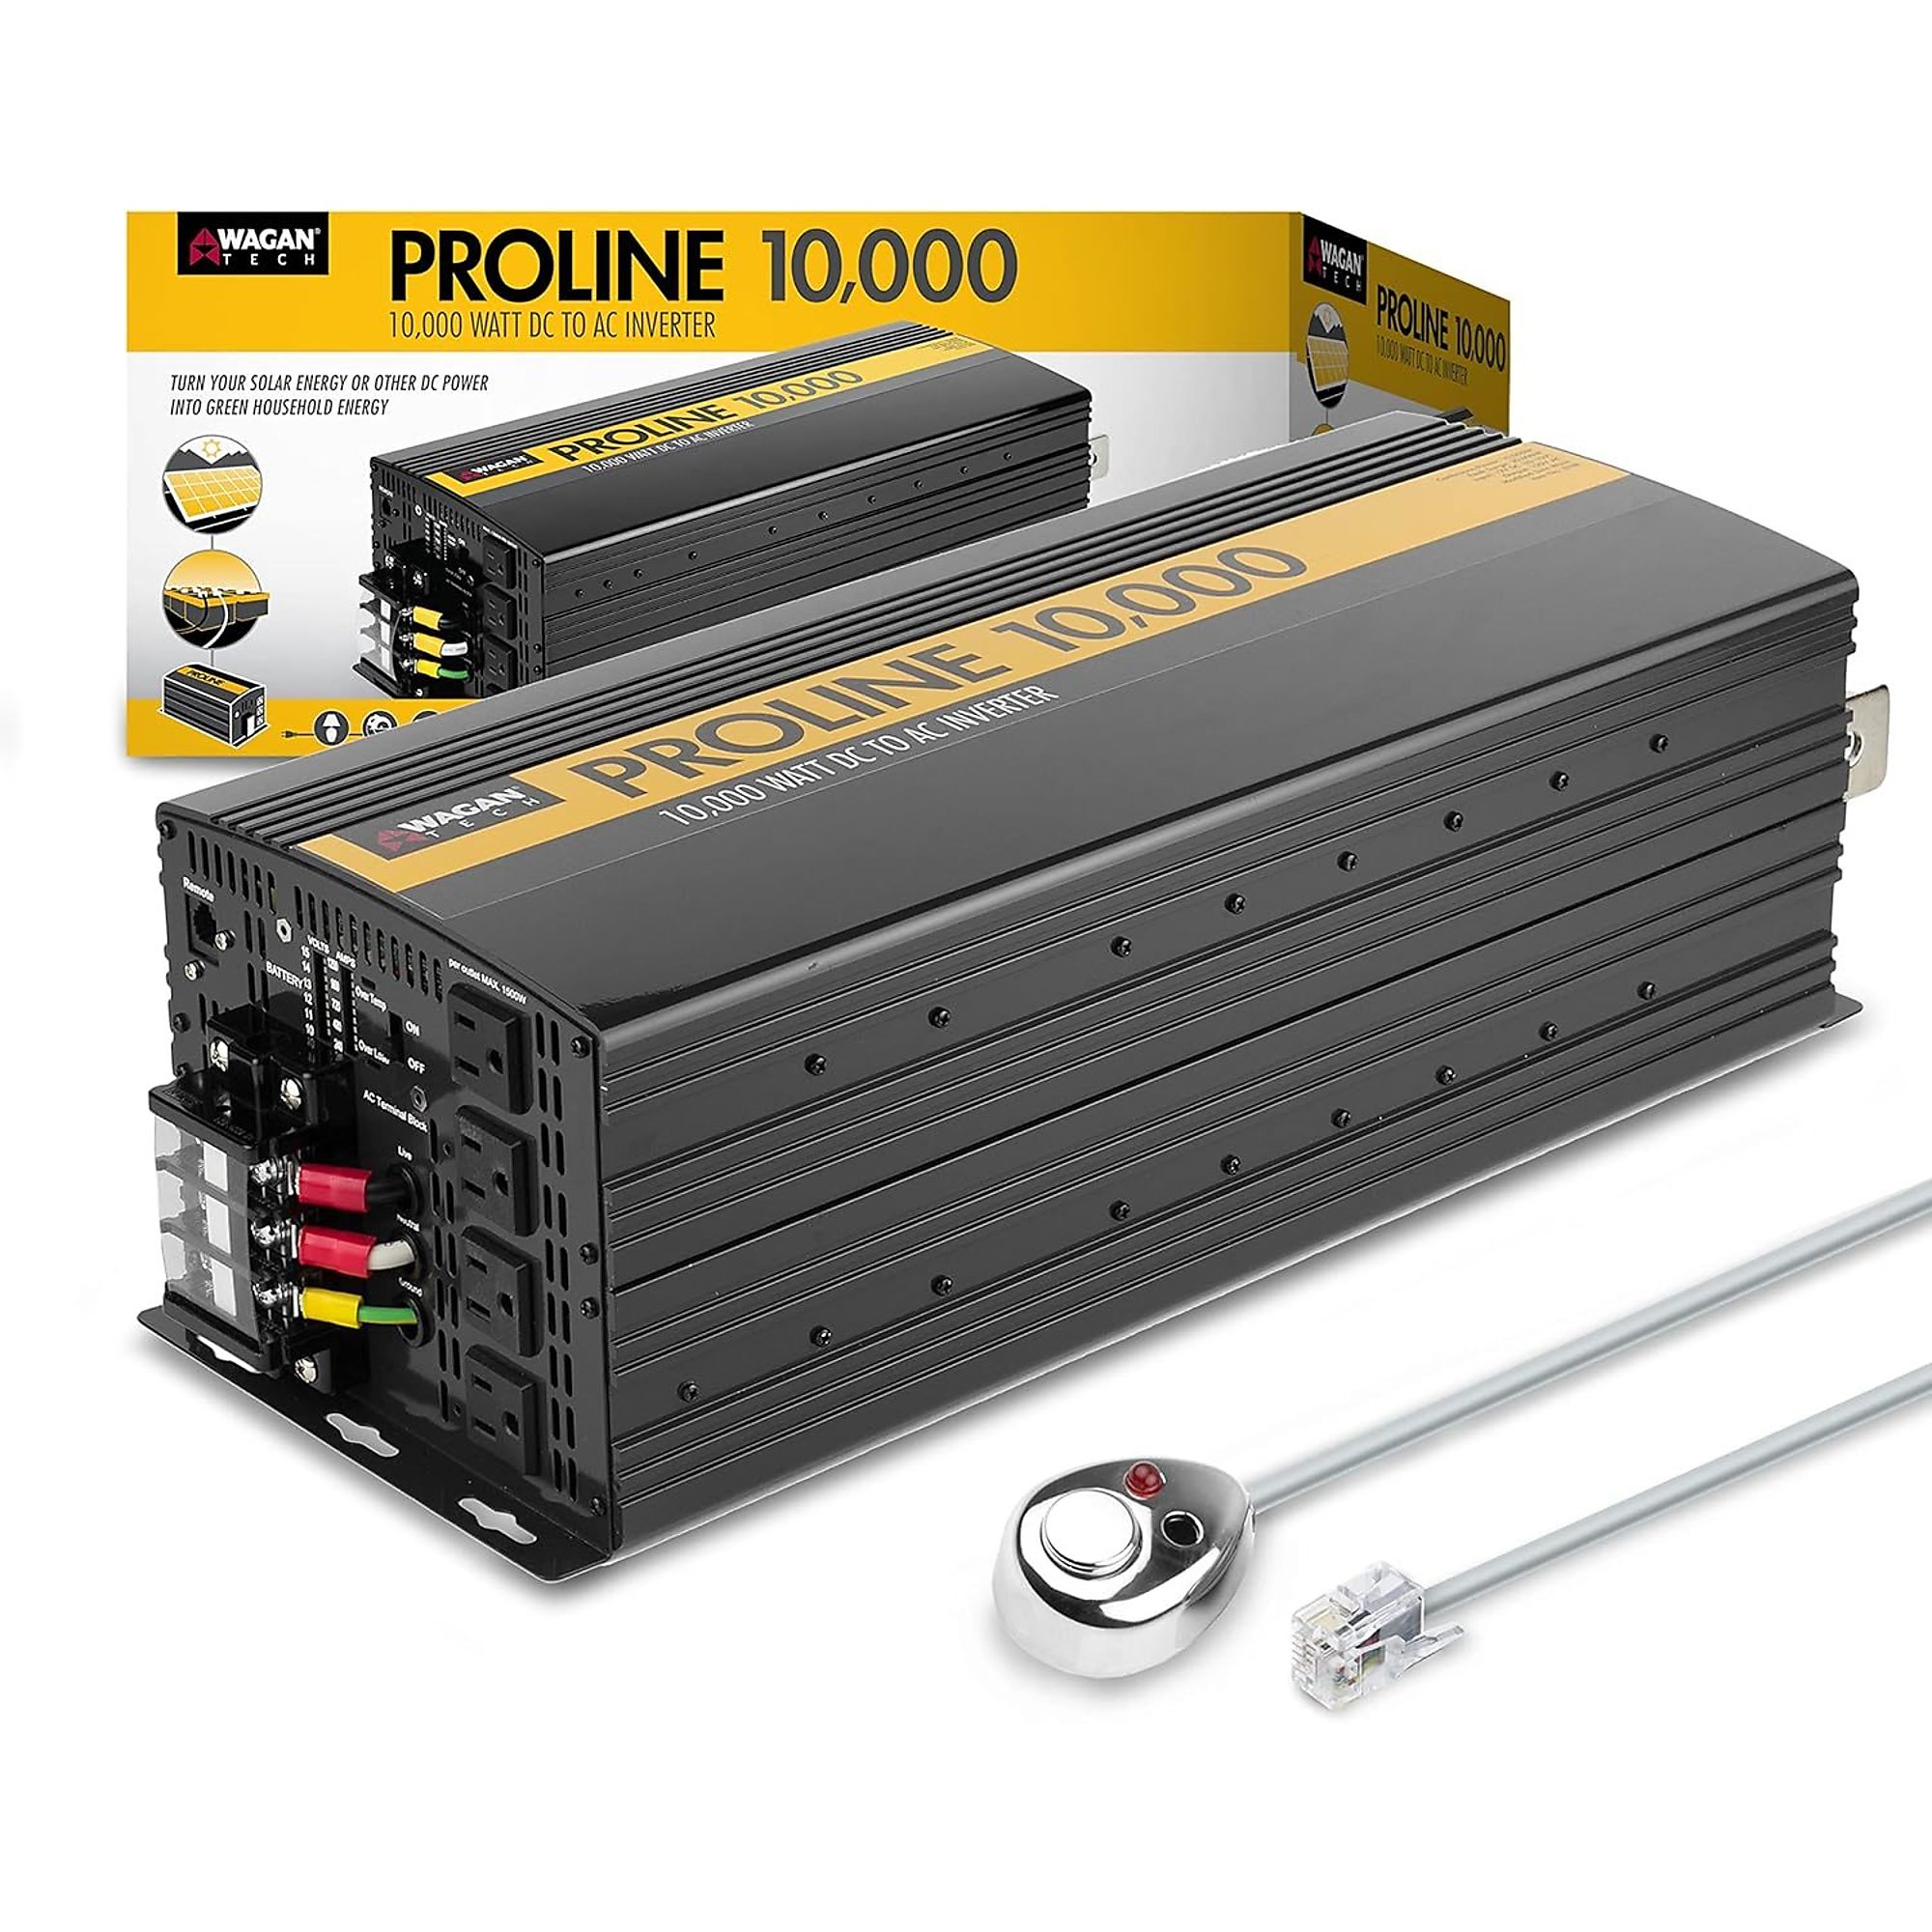 Wagan Tech, Proline 10000W Inverter + Remote, USB Ports (qty.) 0 AC Outlets (qty.) 4 Watts 10000 Model 3748